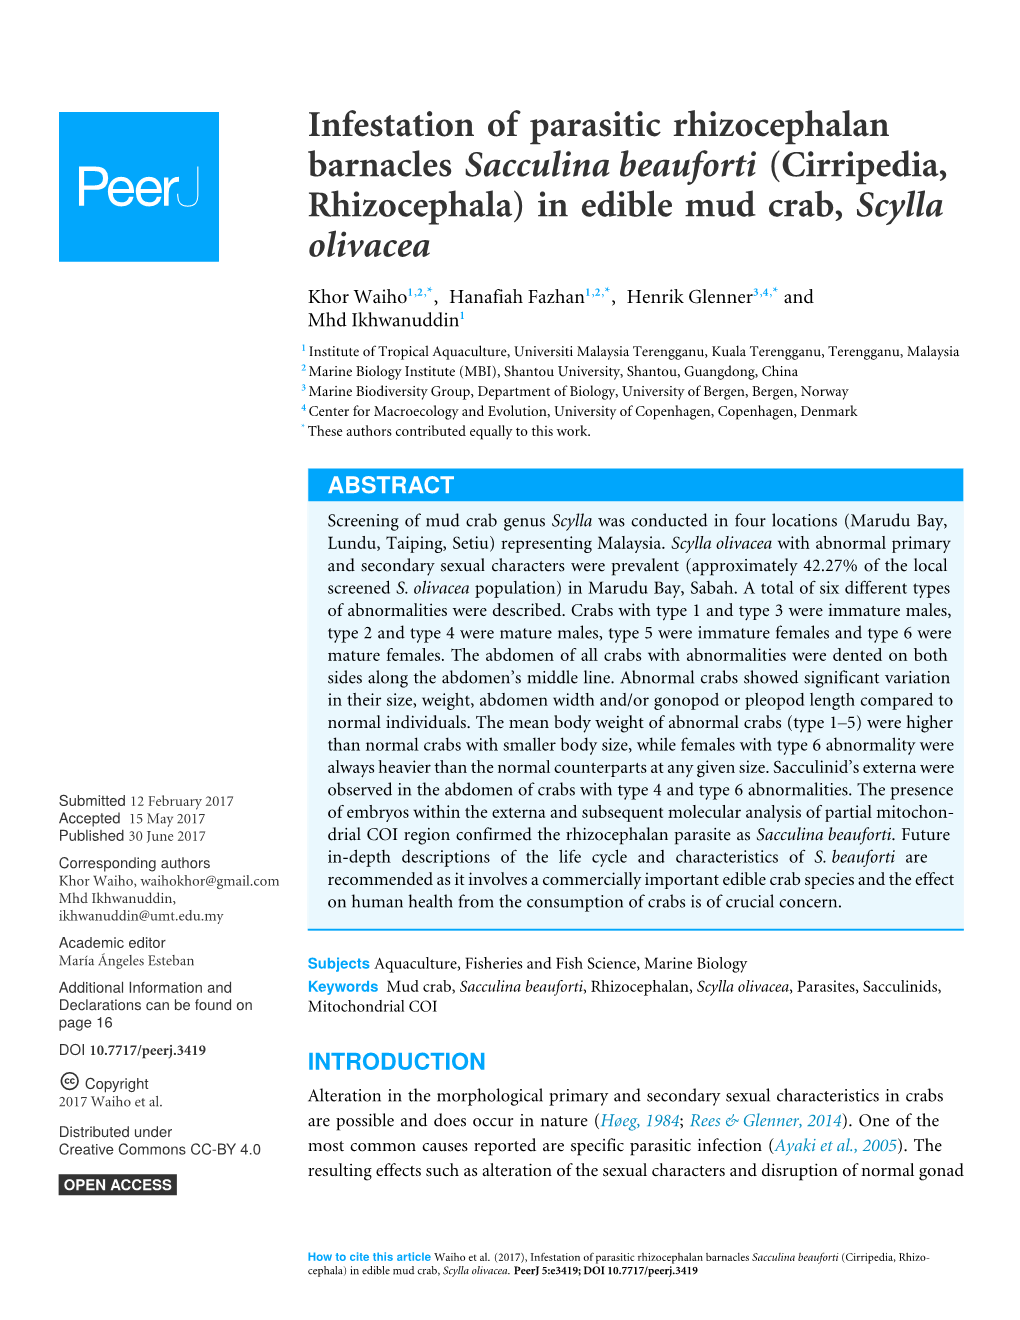 Infestation of Parasitic Rhizocephalan Barnacles Sacculina Beauforti (Cirripedia, Rhizocephala) in Edible Mud Crab, Scylla Olivacea